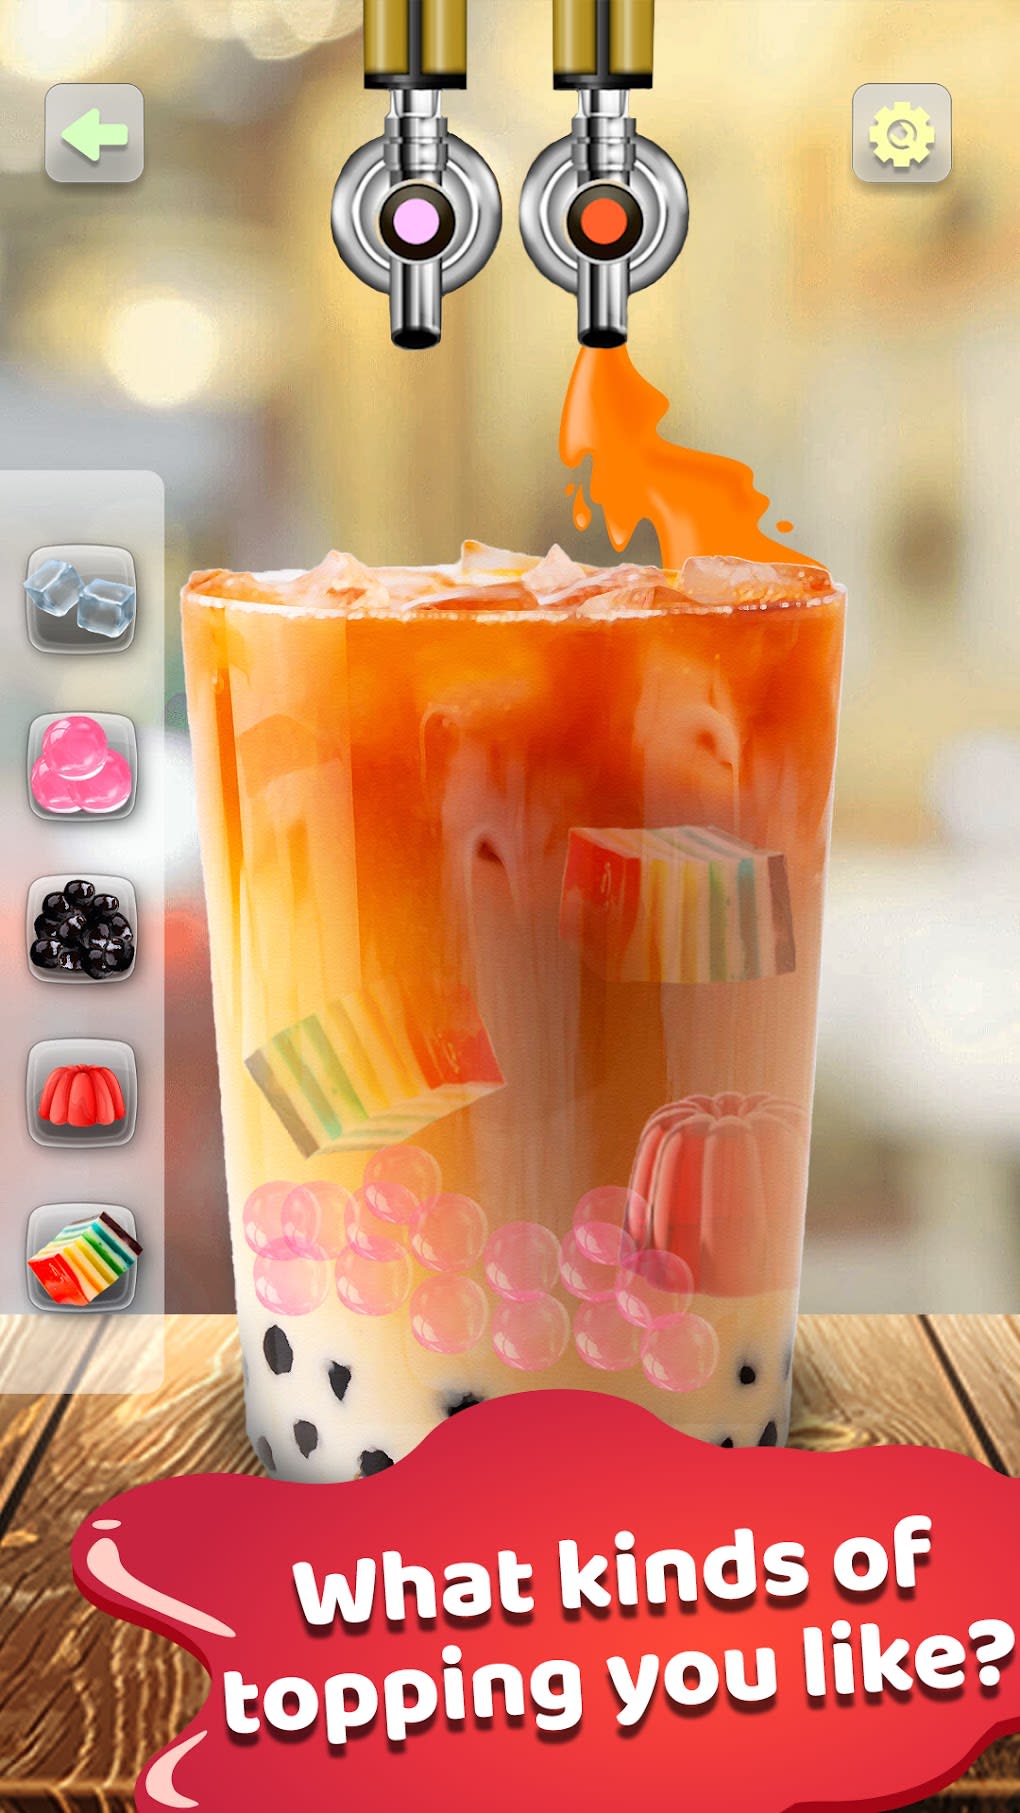 Bubble Tea Recipe - Boba DIY para Android - Download